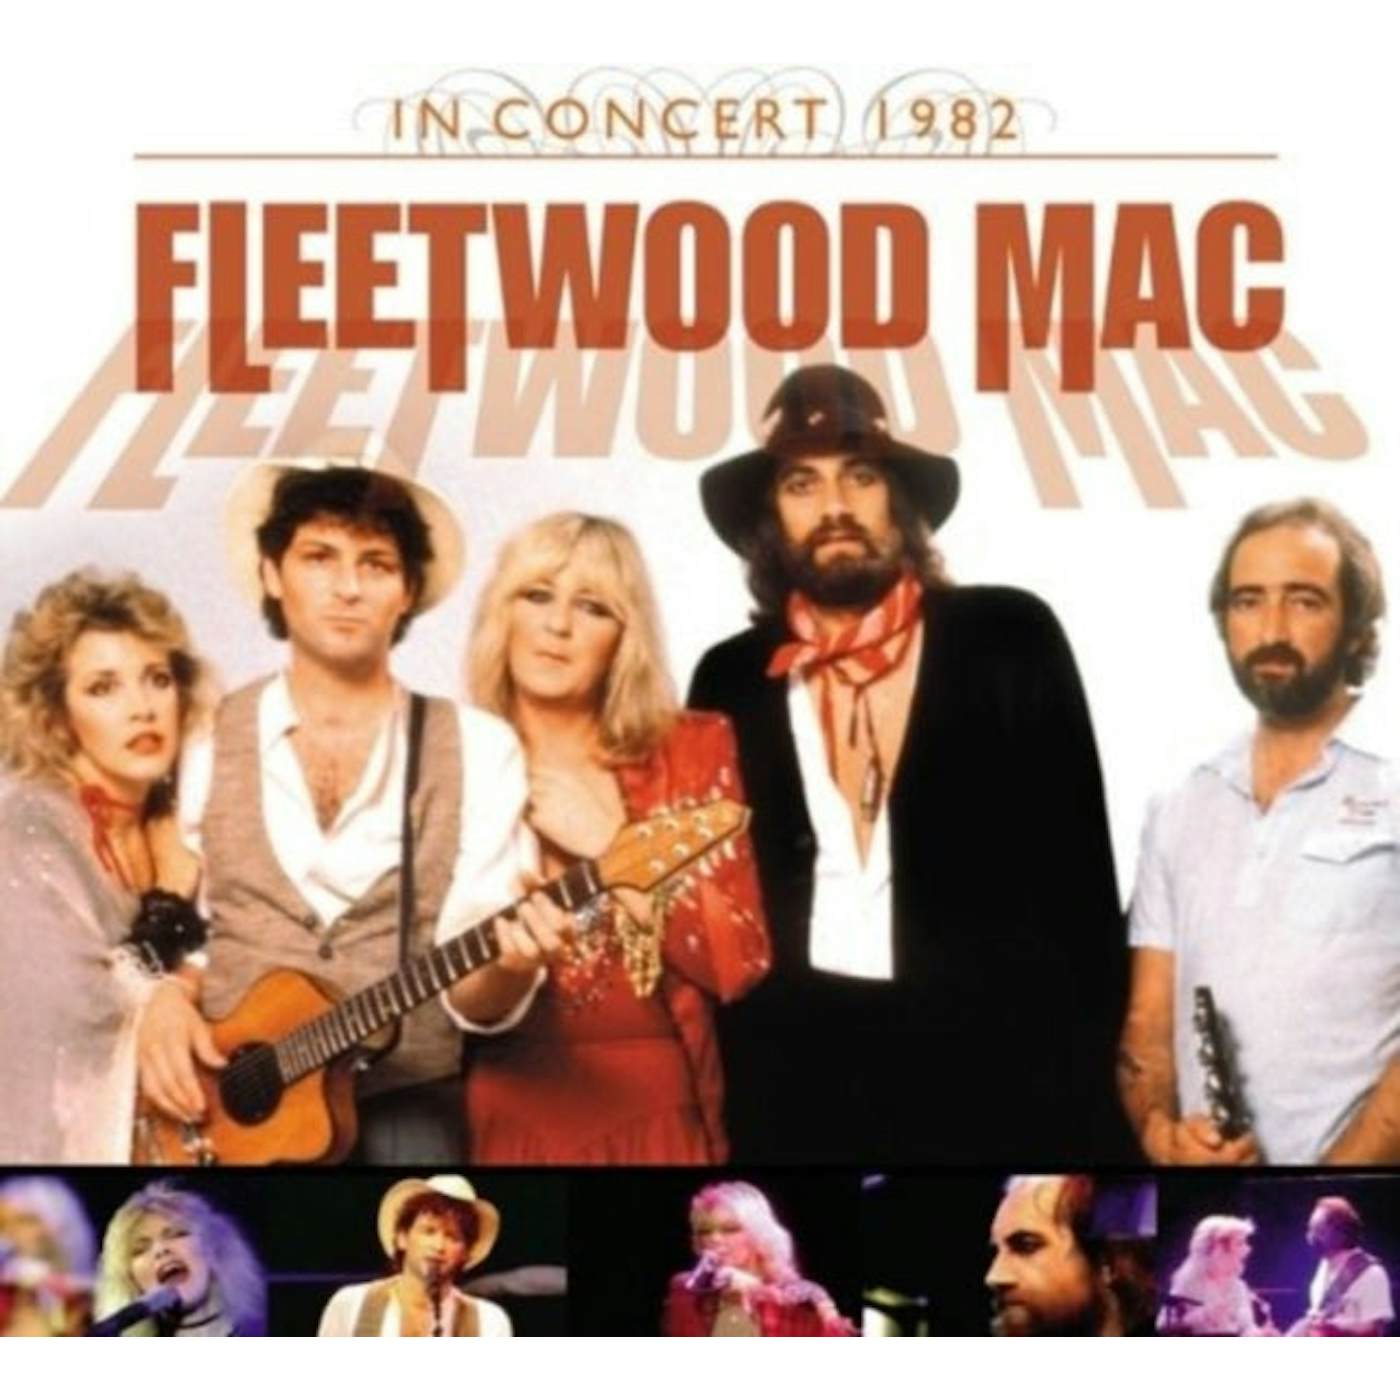 Fleetwood Mac LP Vinyl Record - From The Forum 19 82